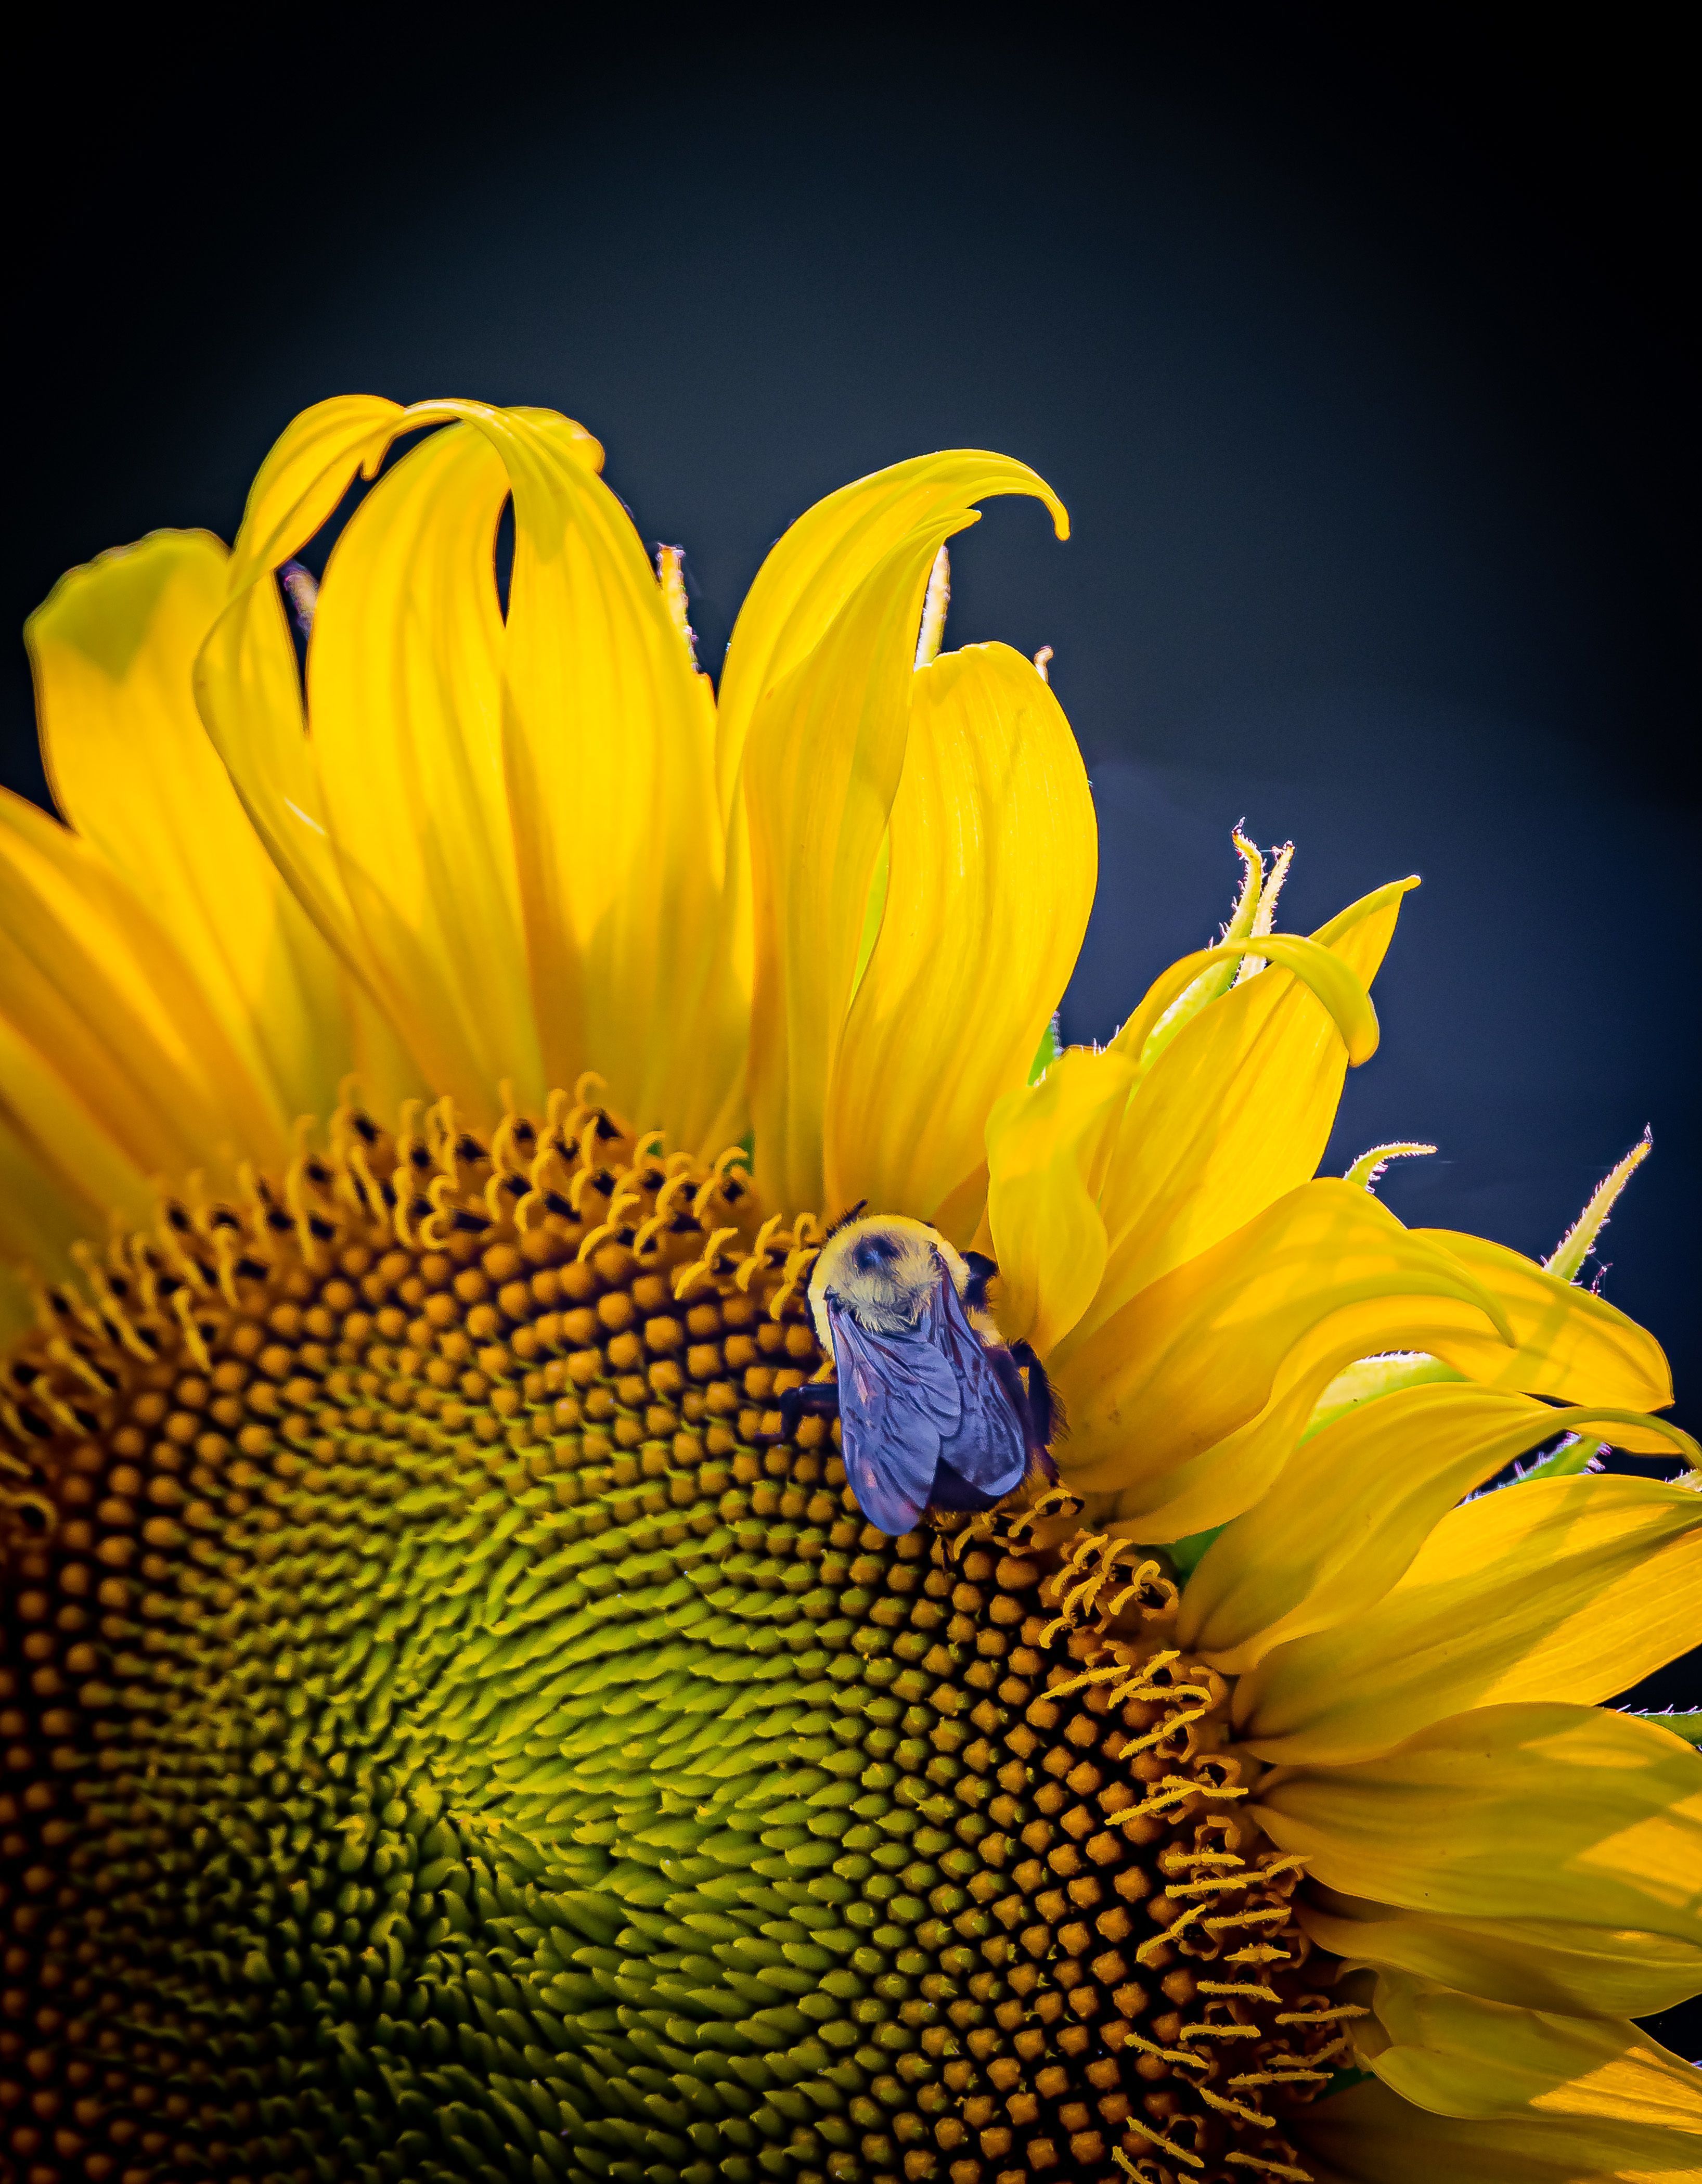 2nd Place "Sunny Bee" by Brett Jaloszynski